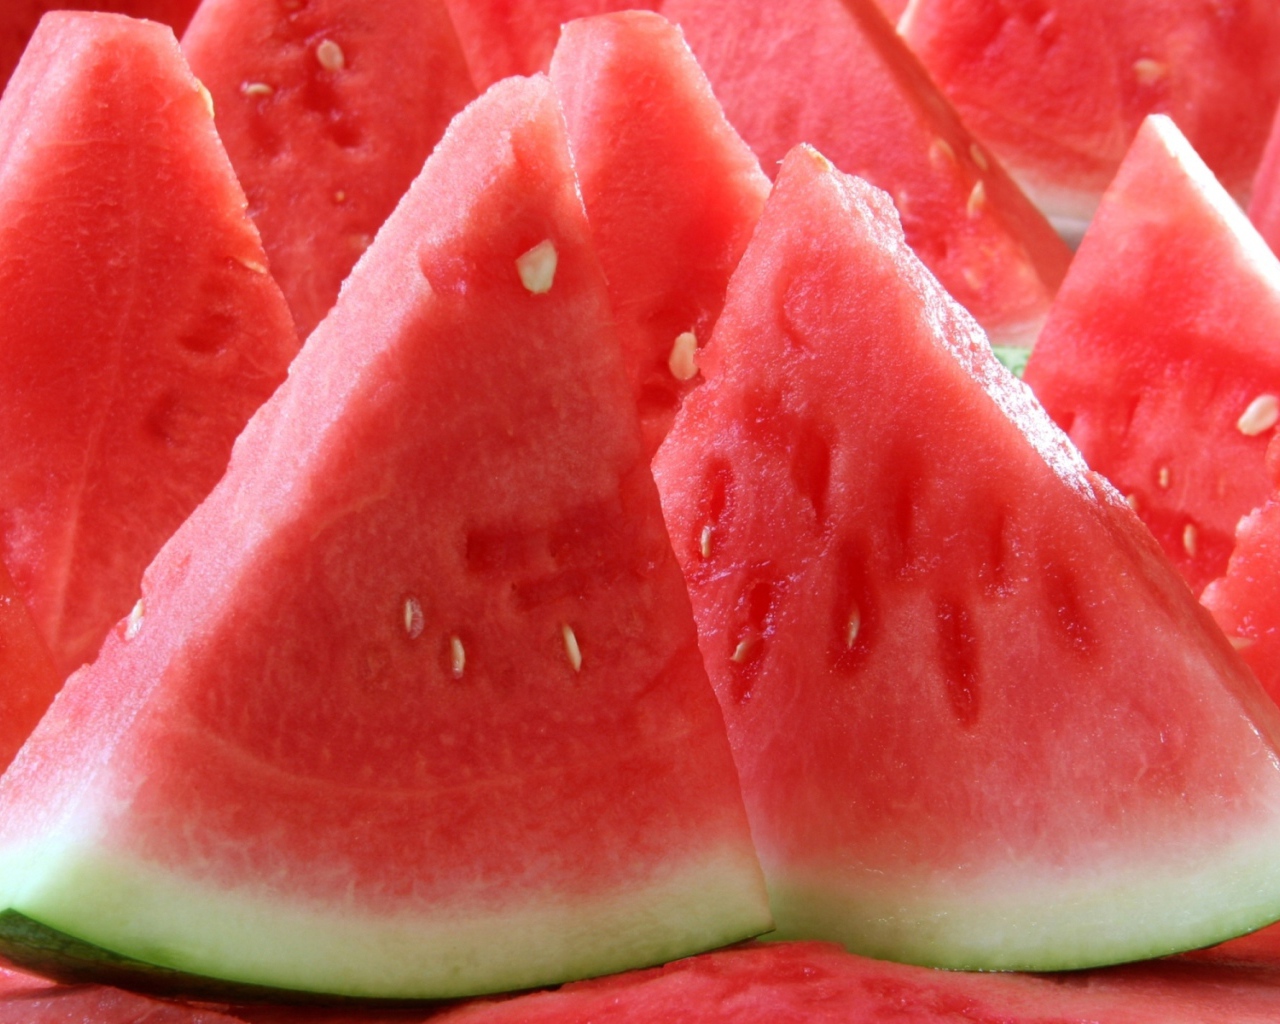 The flesh is seedless watermelon